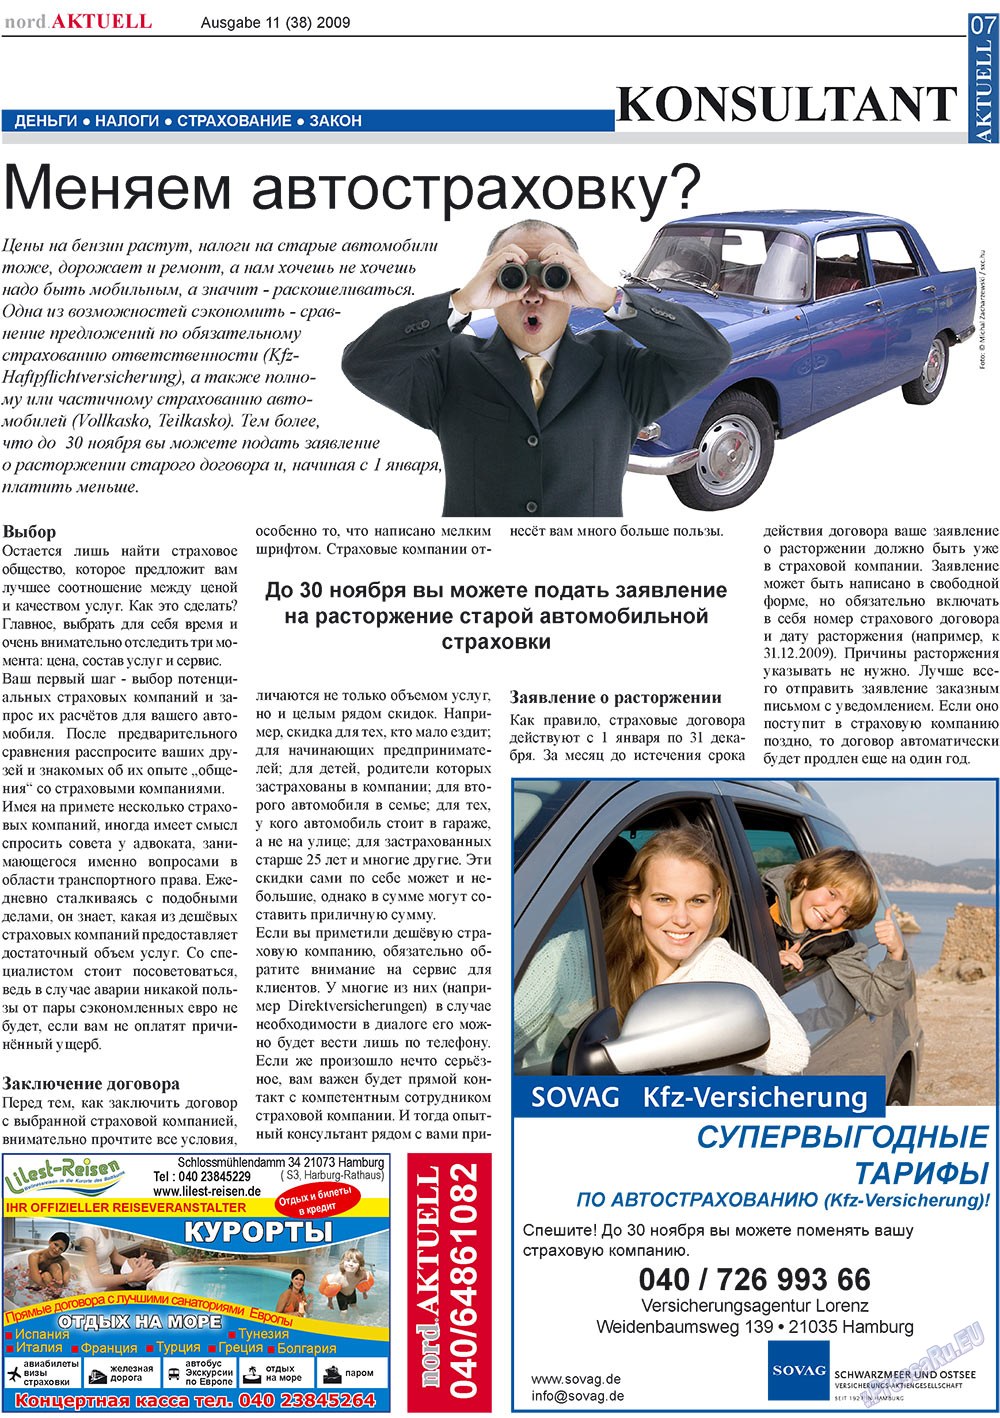 nord.Aktuell, газета. 2009 №11 стр.7